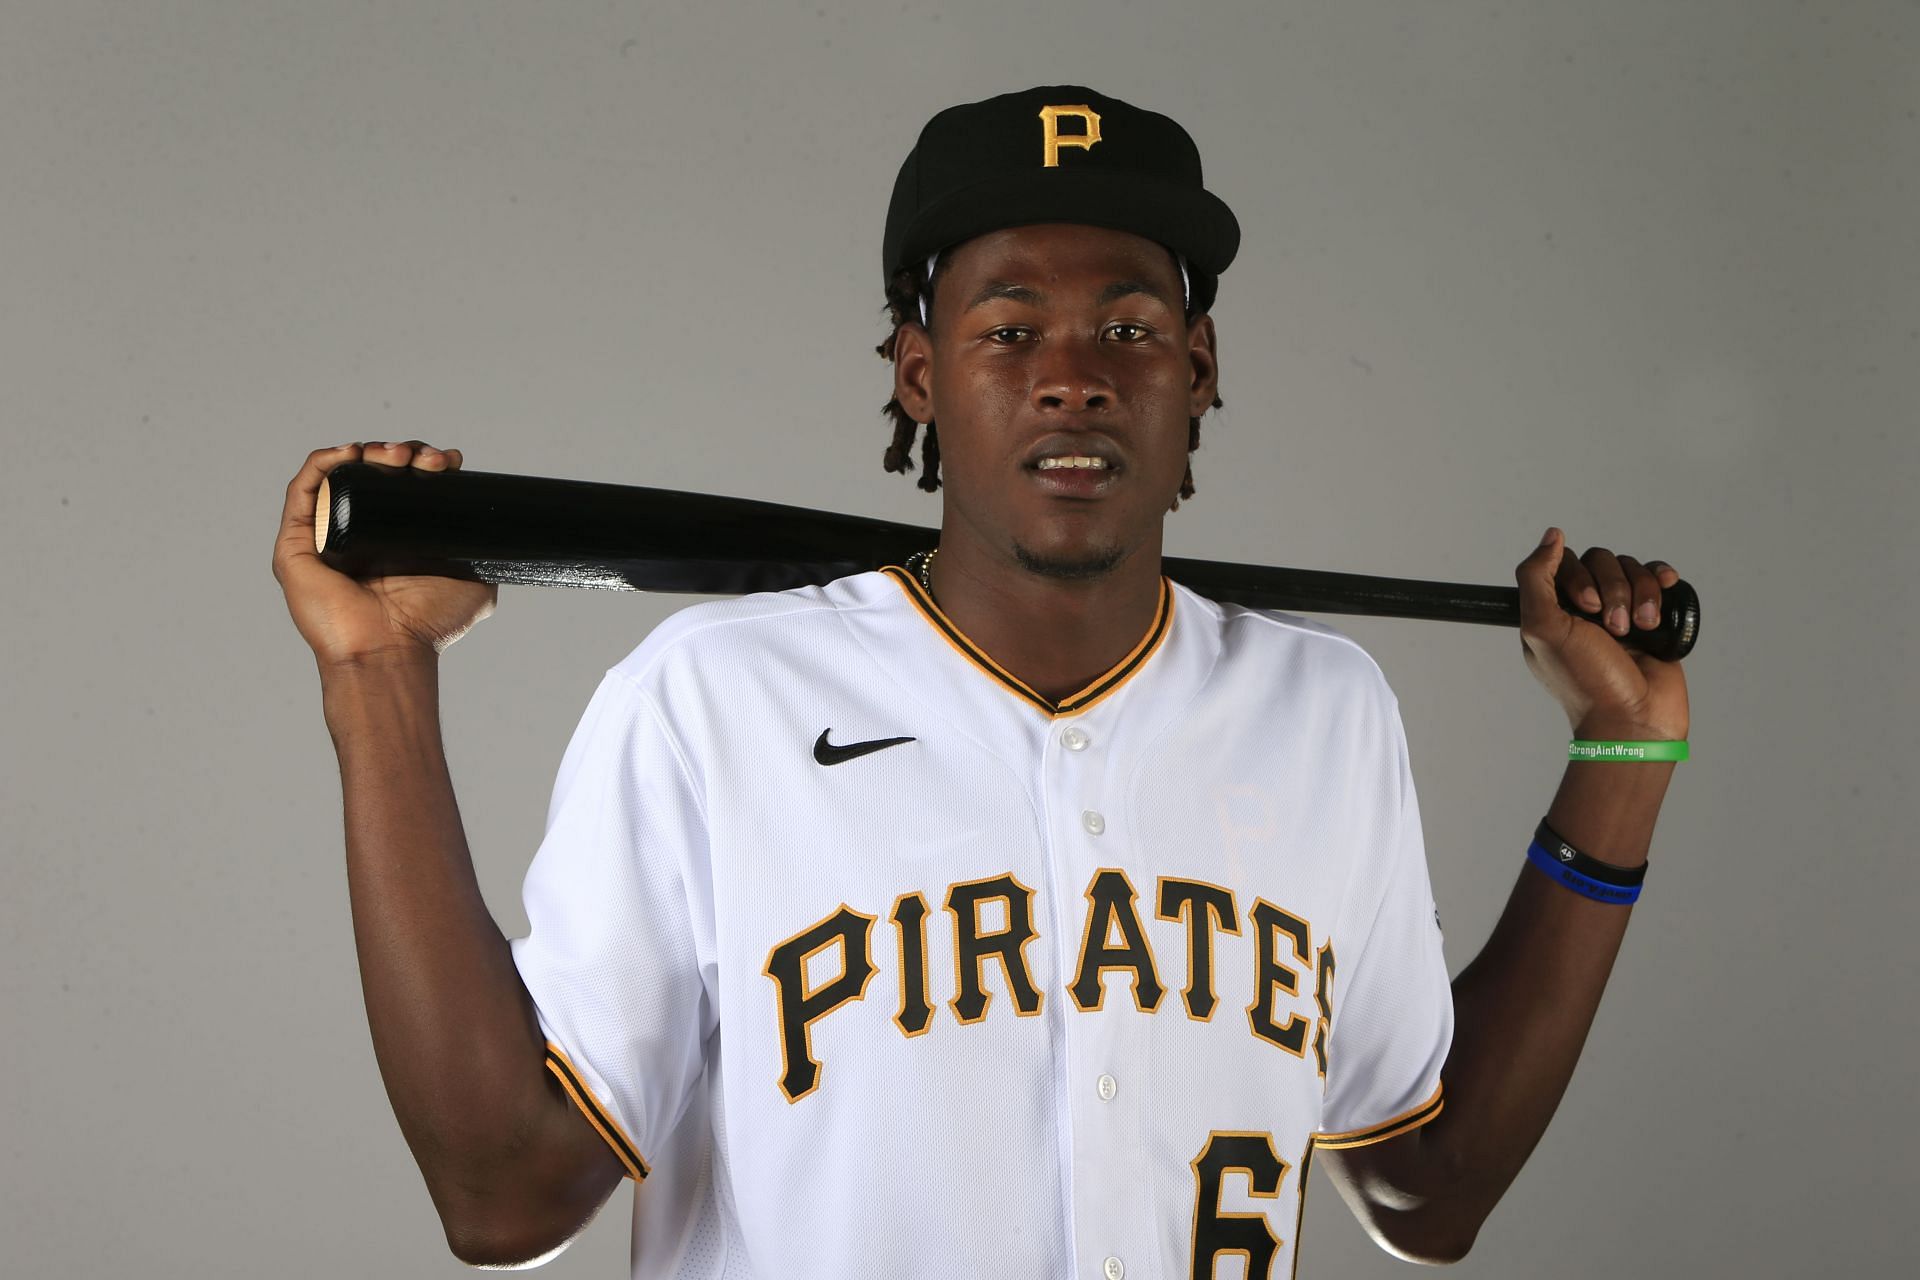 Future shortstop? Outfielder? Regardless, Pirates' Oneil Cruz